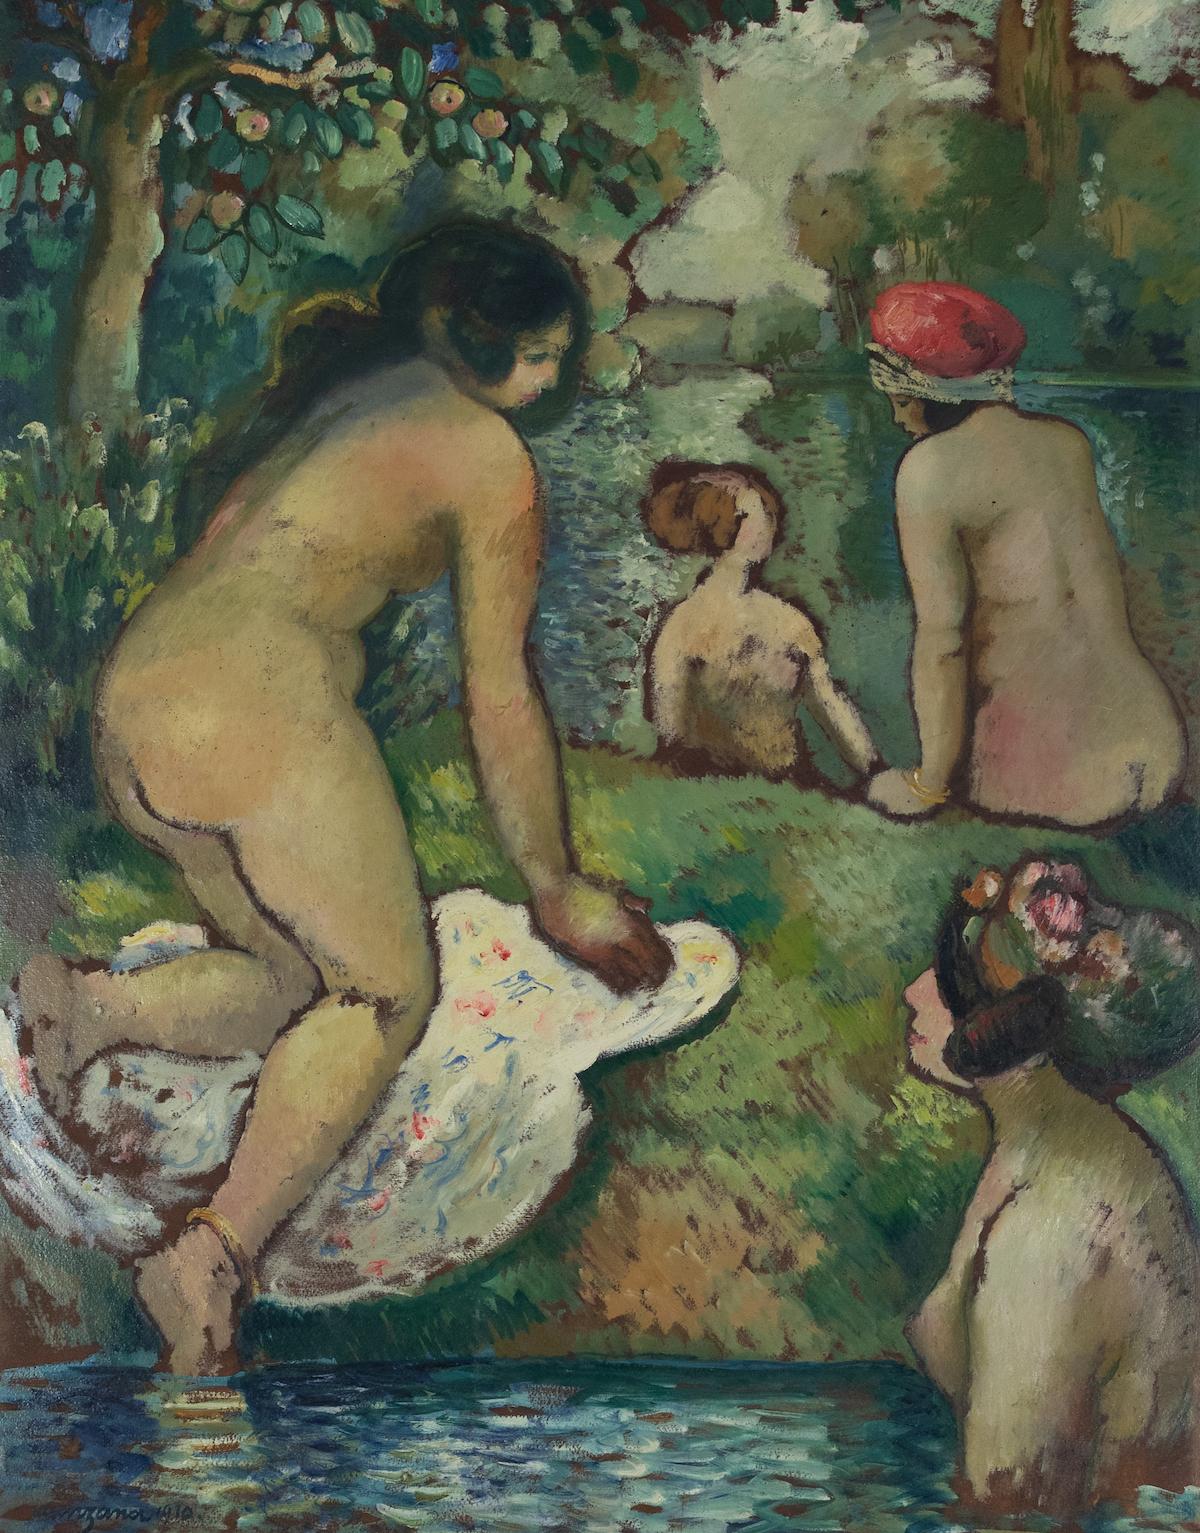 Georges Henri Manzana Pissarro Nude Painting - Baigneuses en Bord de Rivière by Georges Manzana Pissarro - Nude painting